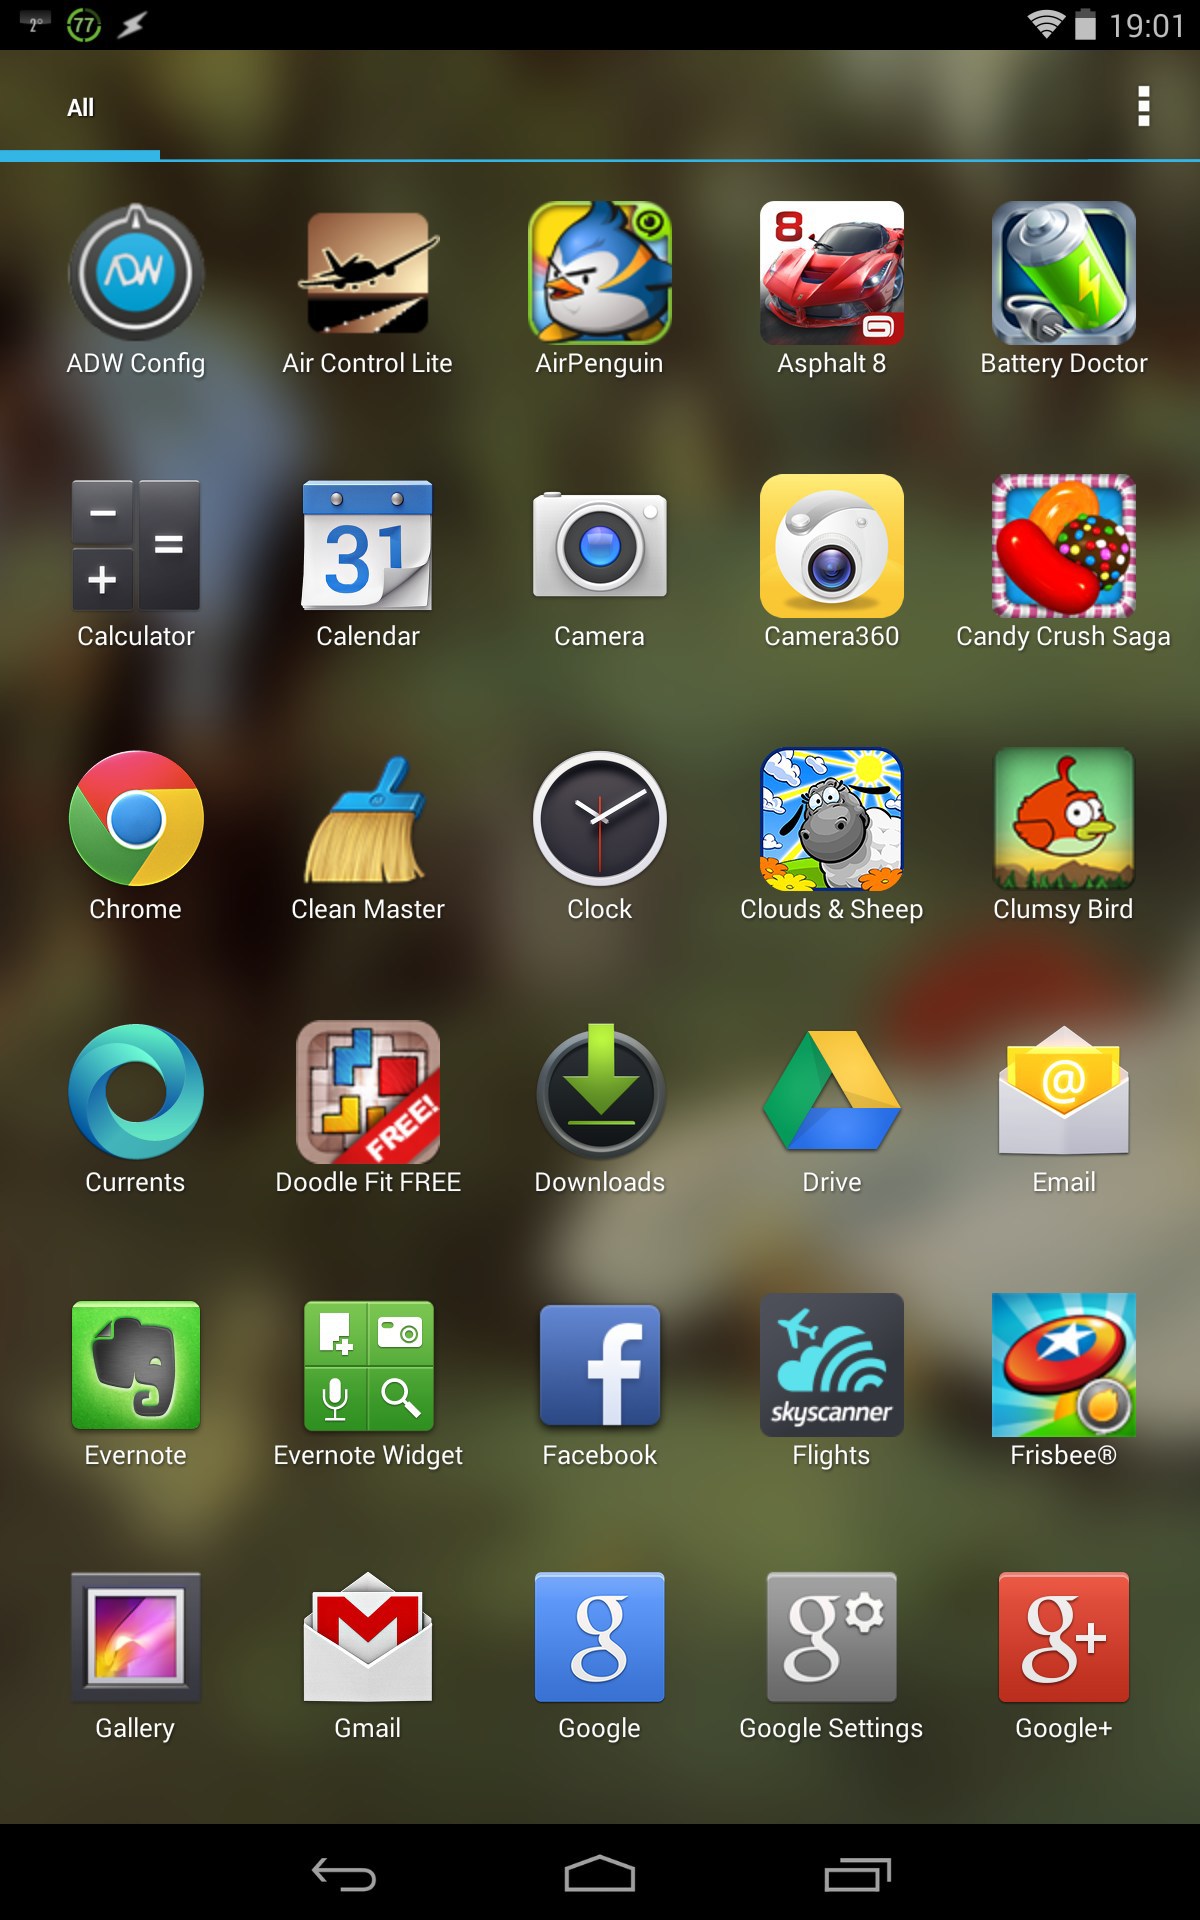 Samsung Galaxy Note 3 Live Wallpaper - Google Plus Icon - 1200x1920  Wallpaper 